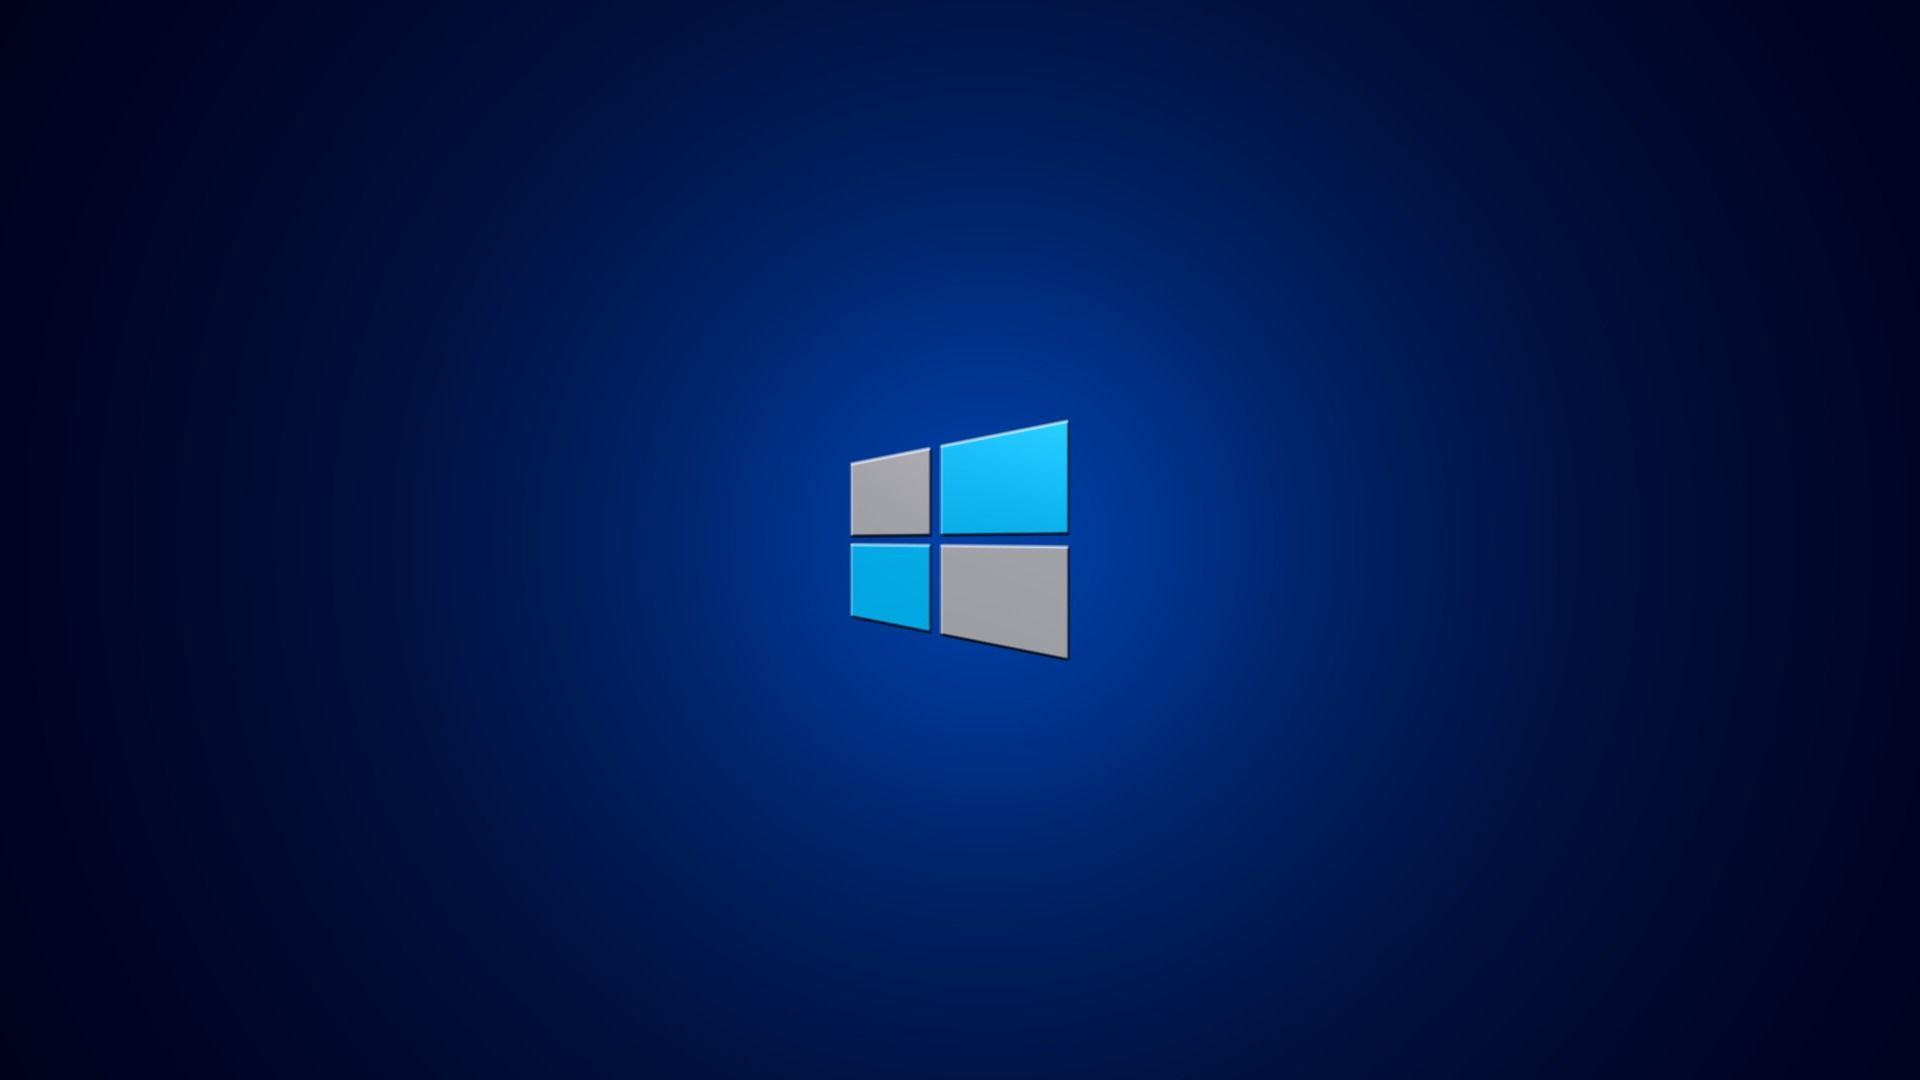 Windows 8 Minimal Official Logo 1080p HD Wallpaper 1080p HD. stuff